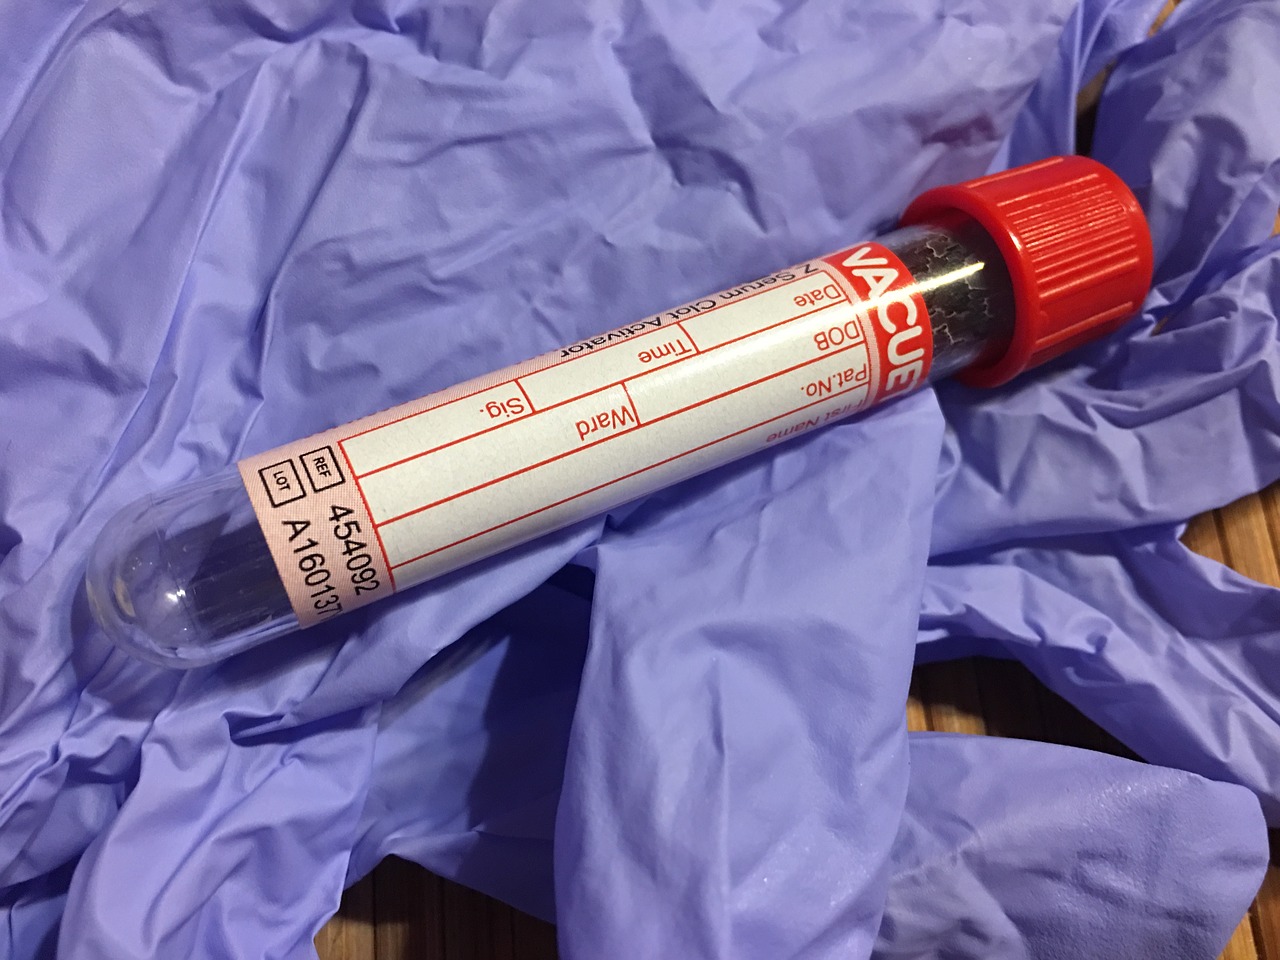 Blood test tube, glove